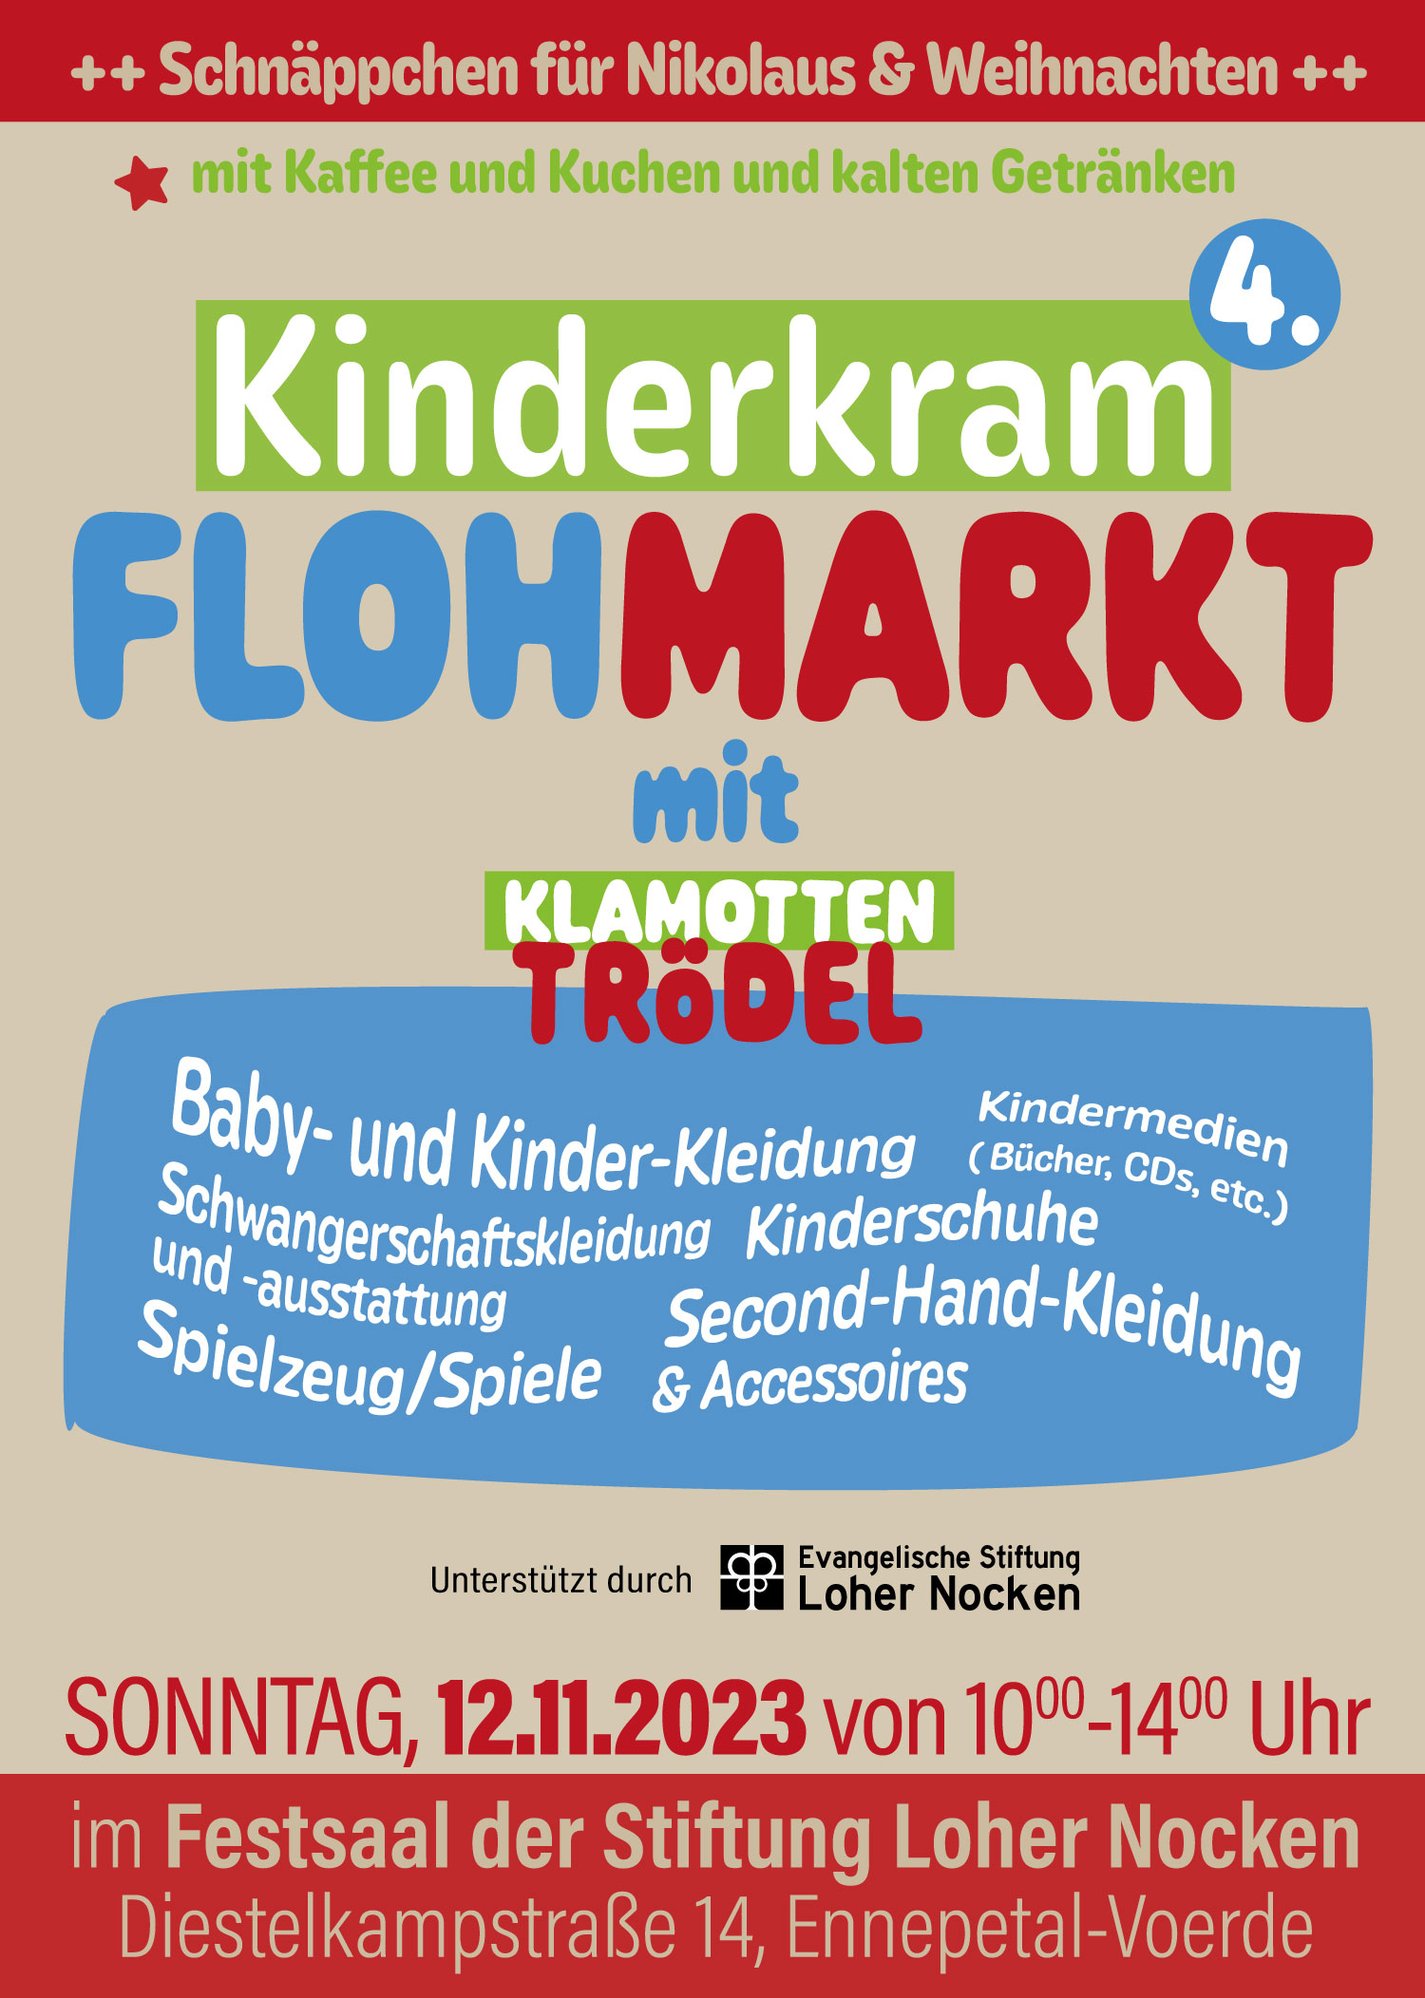 4Kinderkram-Flohmarkt-Flyer-din-a6-4-0